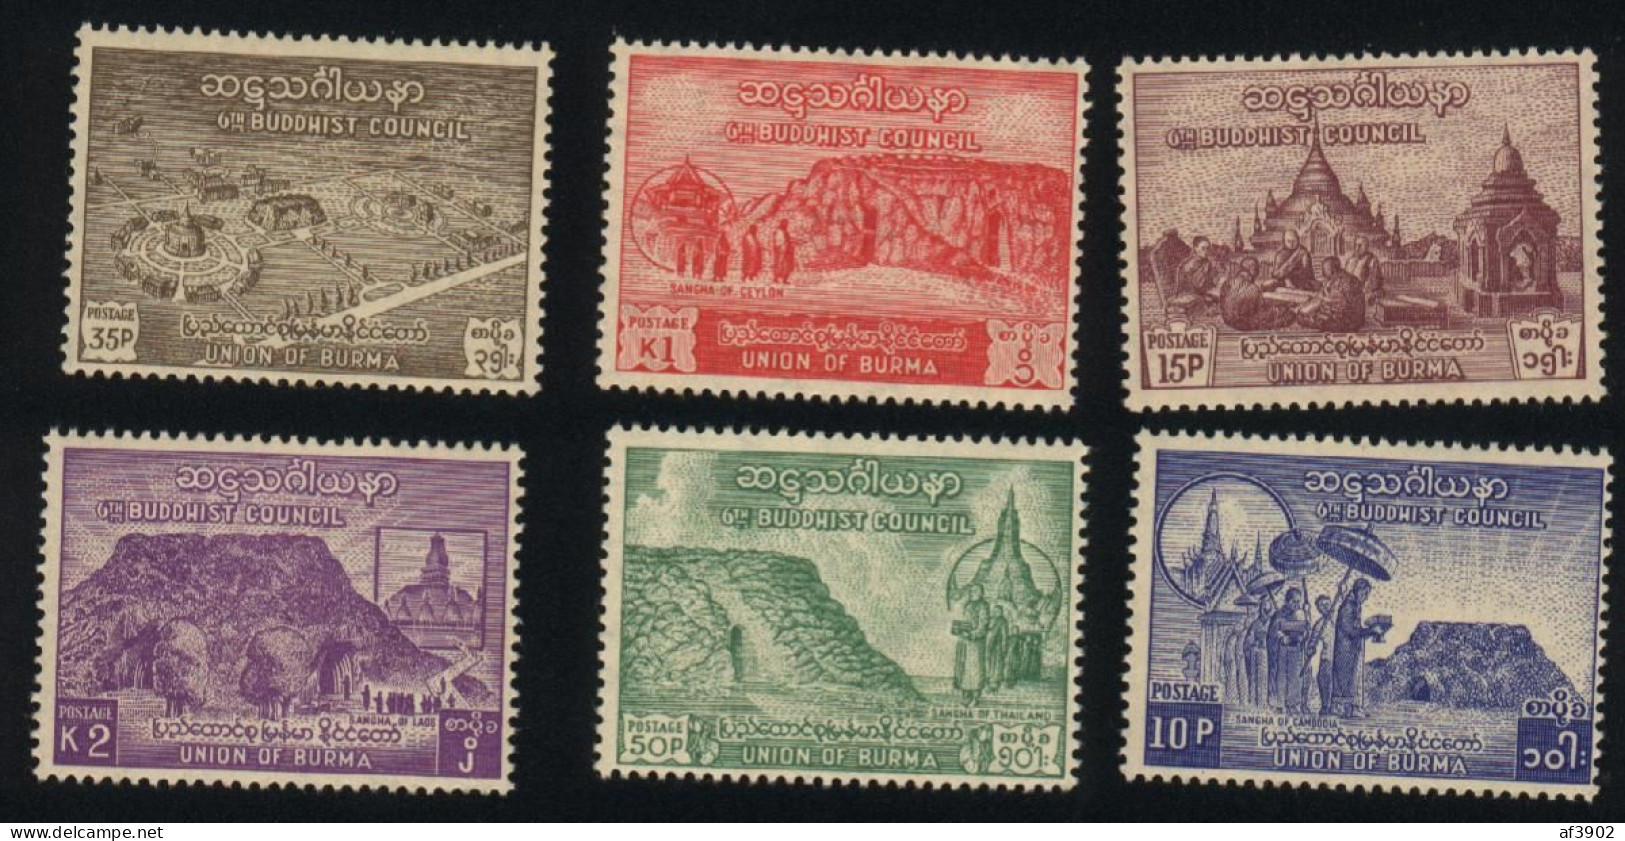 BURMA/MYANMAR STAMP 1954 ISSUED 6TH BUDDHA SEMINAR COMPLETE SET, MNH - Myanmar (Birma 1948-...)